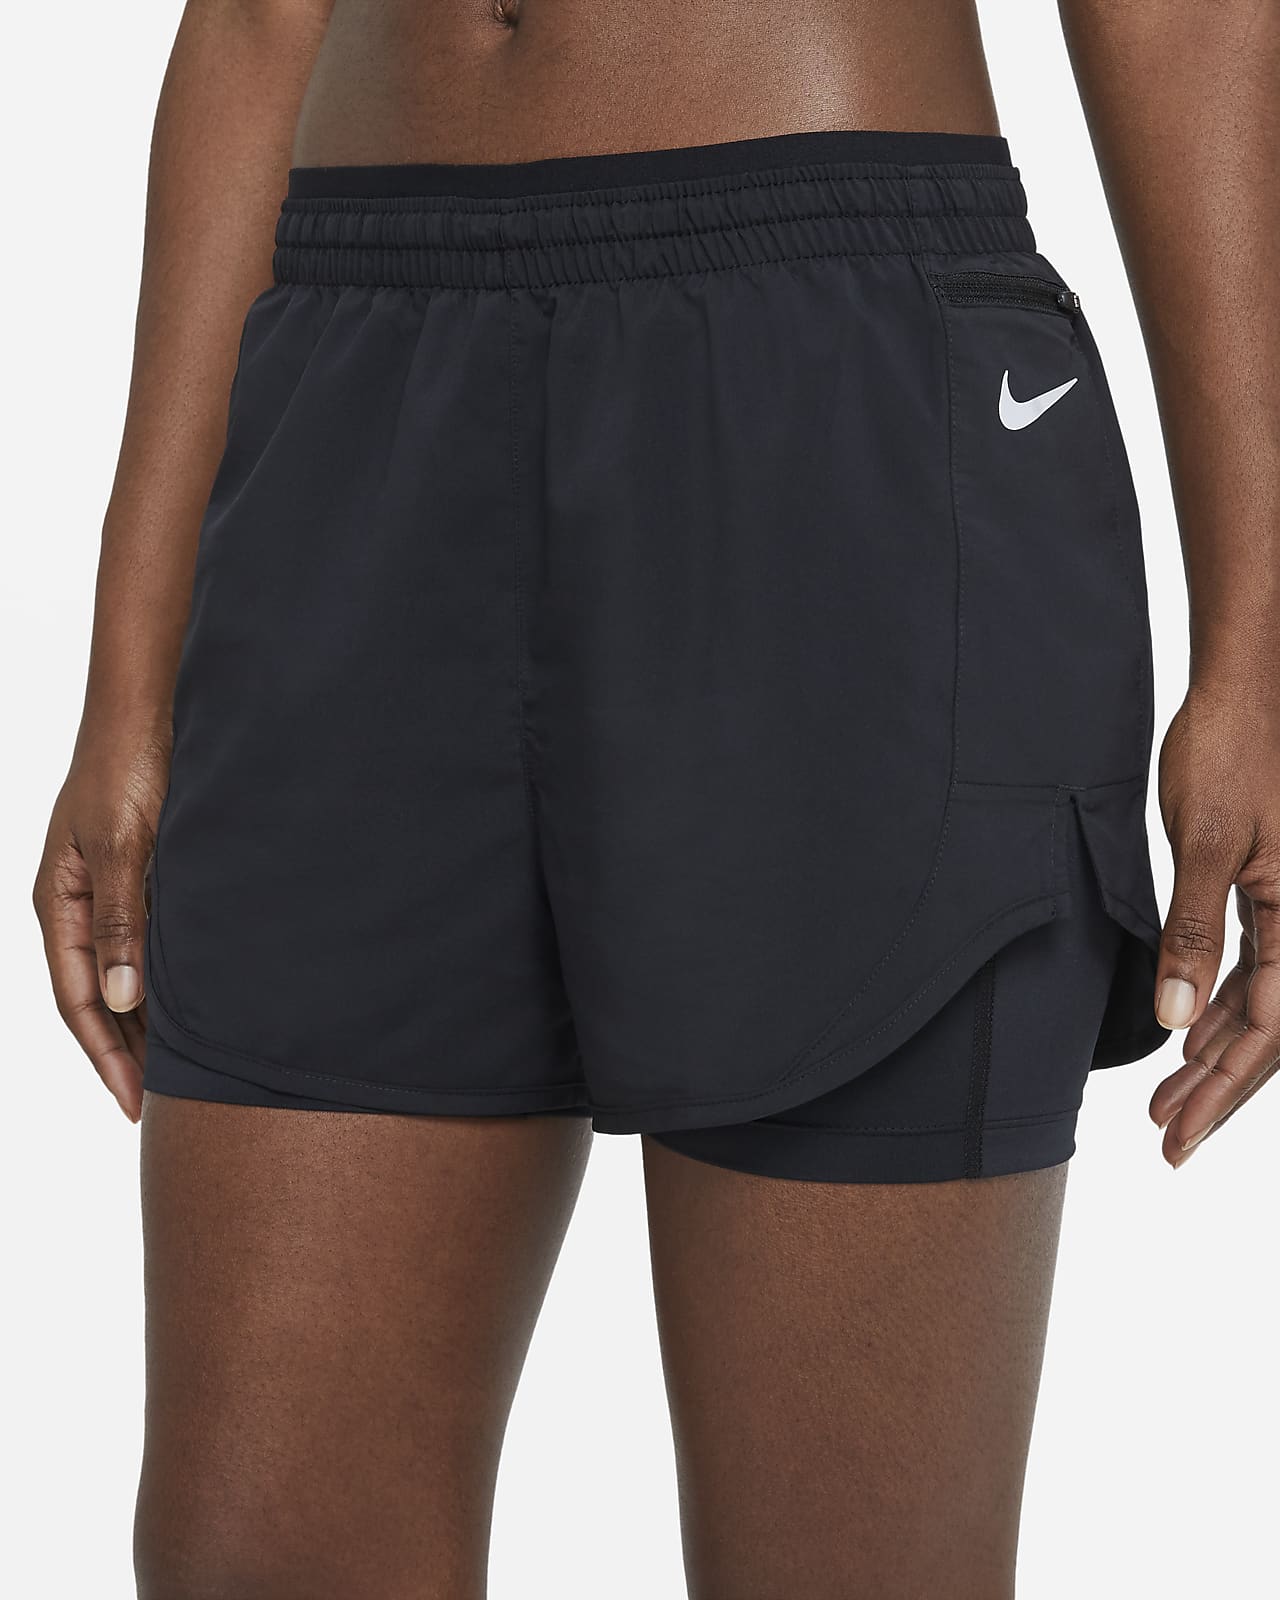 Nike, Pro Flex Women's 2-in-1 Shorts, Performance Shorts